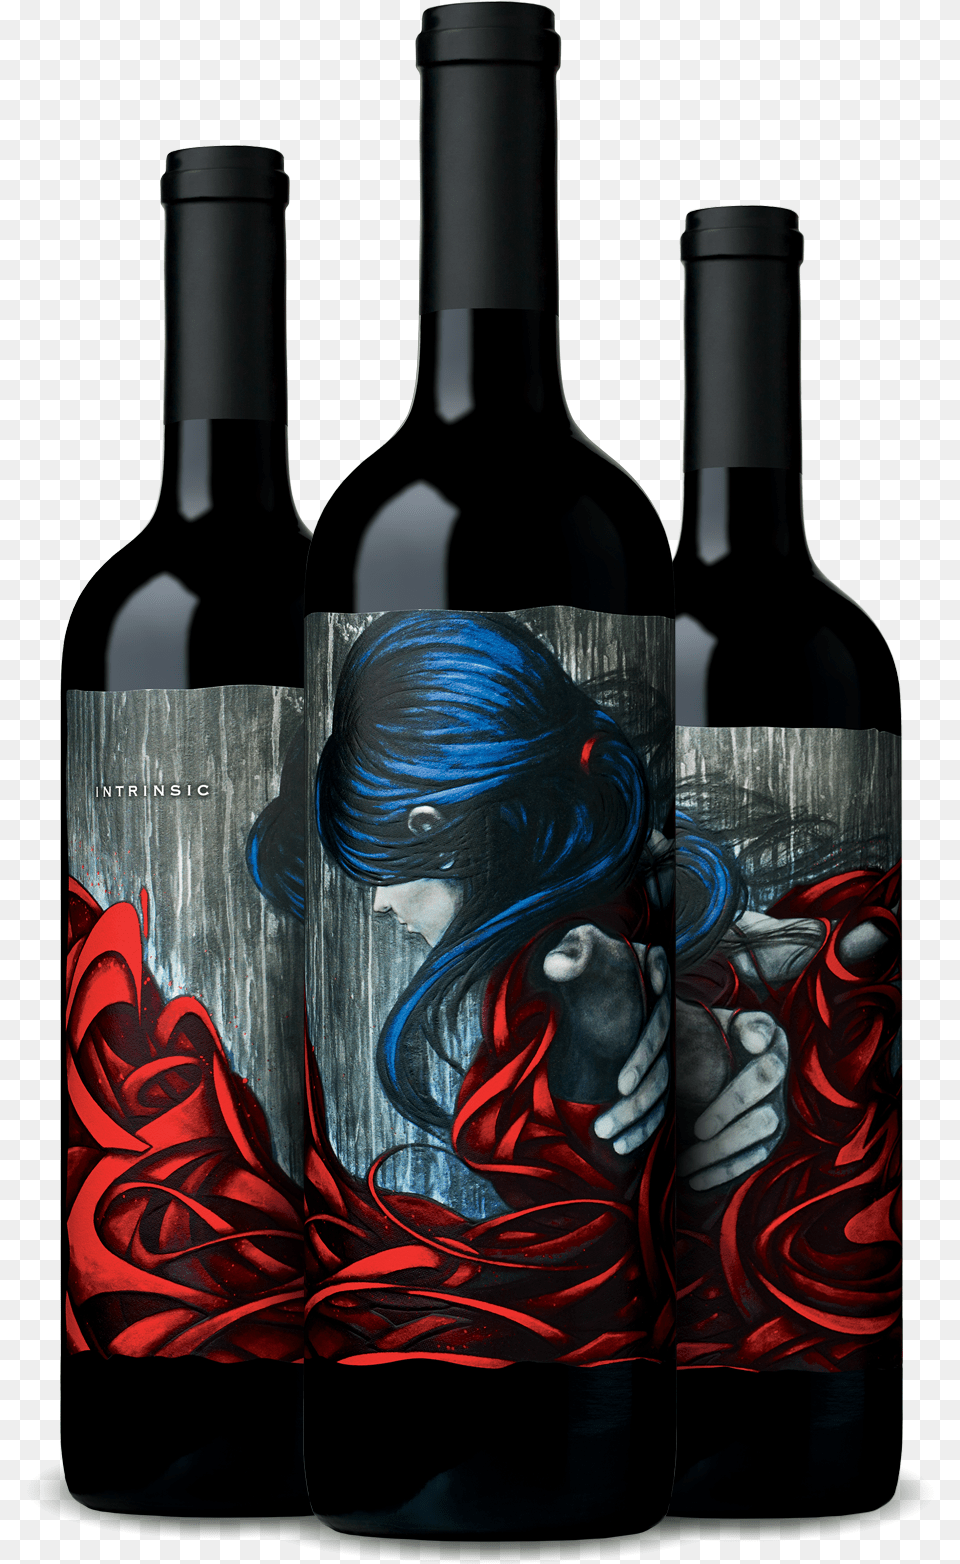 Intrinsic Wine Red Blend, Bottle, Adult, Wine Bottle, Person Free Transparent Png